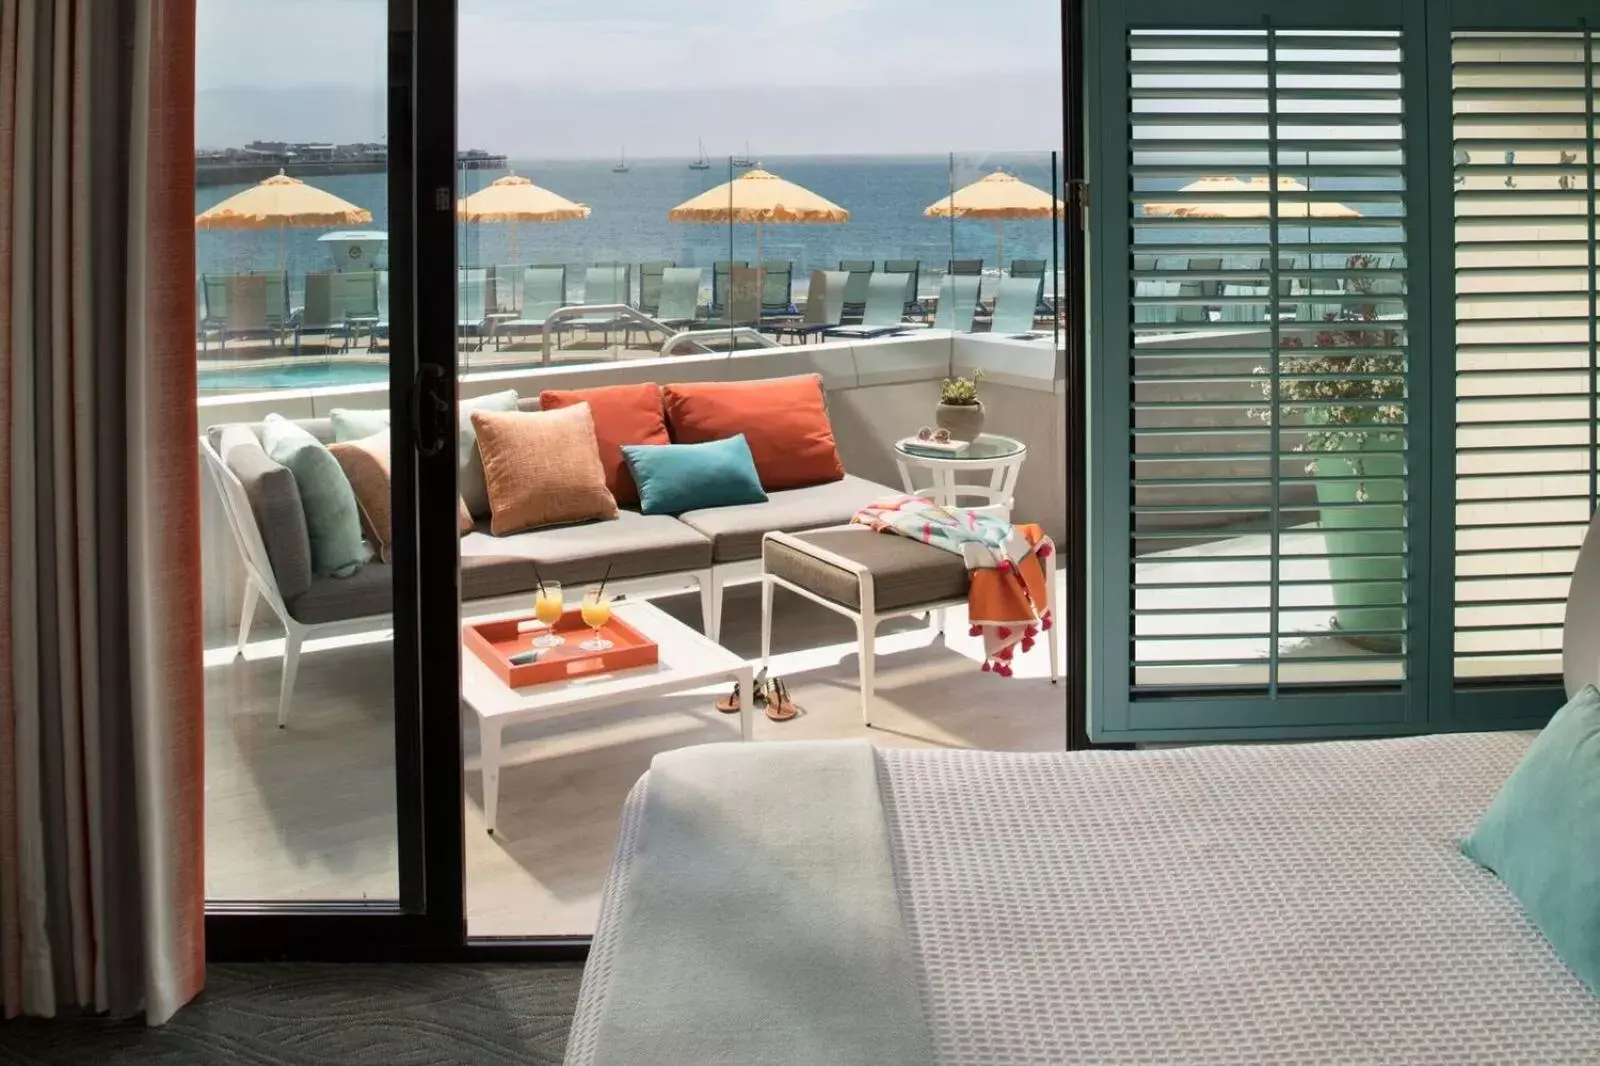 Balcony/Terrace, Seating Area in Dream Inn Santa Cruz